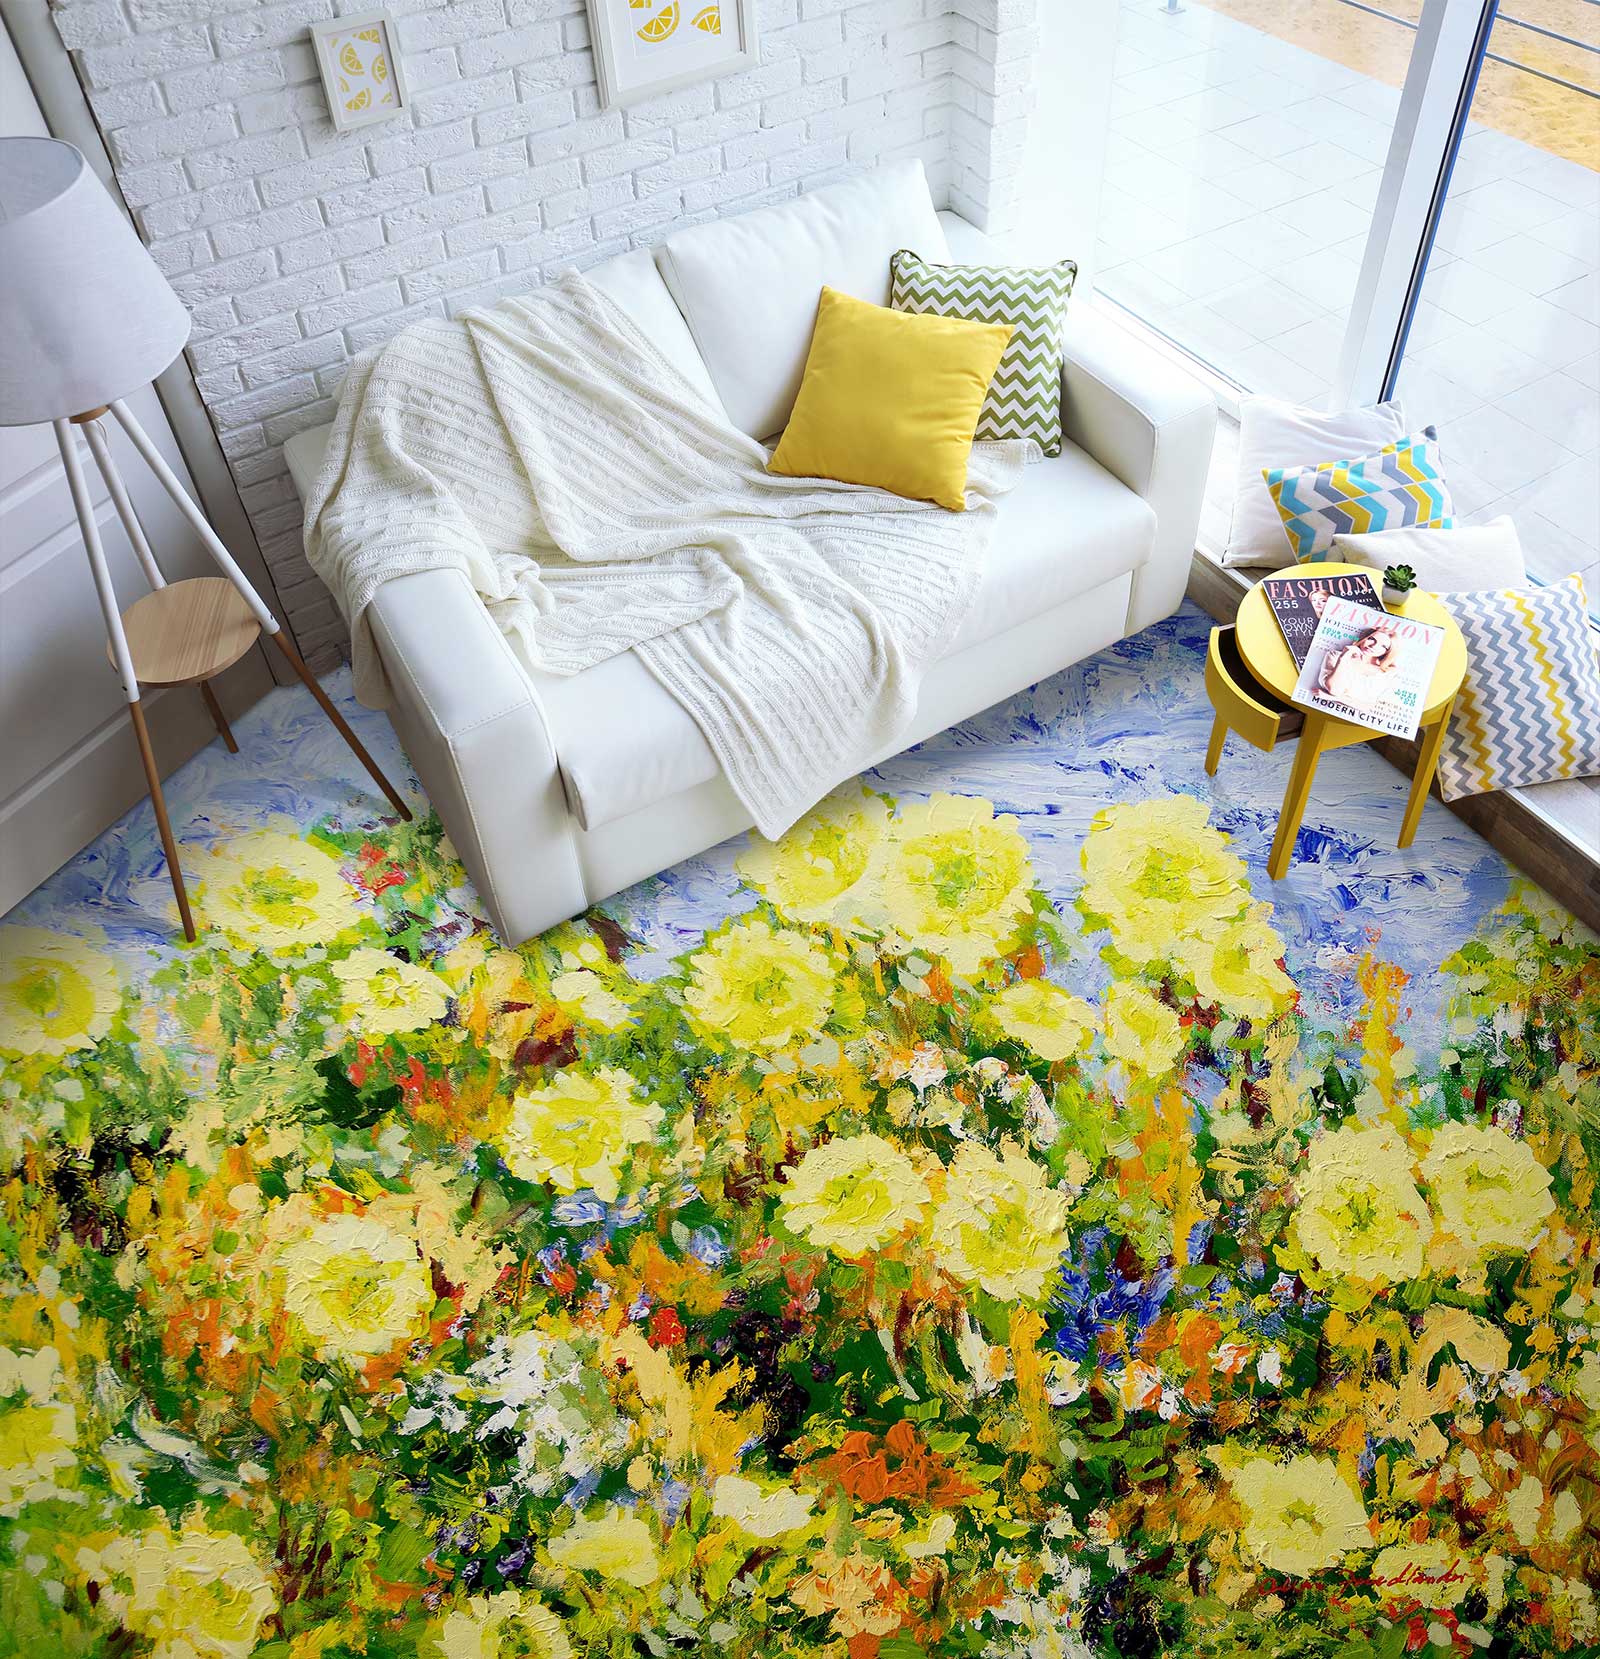 3D Yellow Flowers 9679 Allan P. Friedlander Floor Mural  Wallpaper Murals Self-Adhesive Removable Print Epoxy